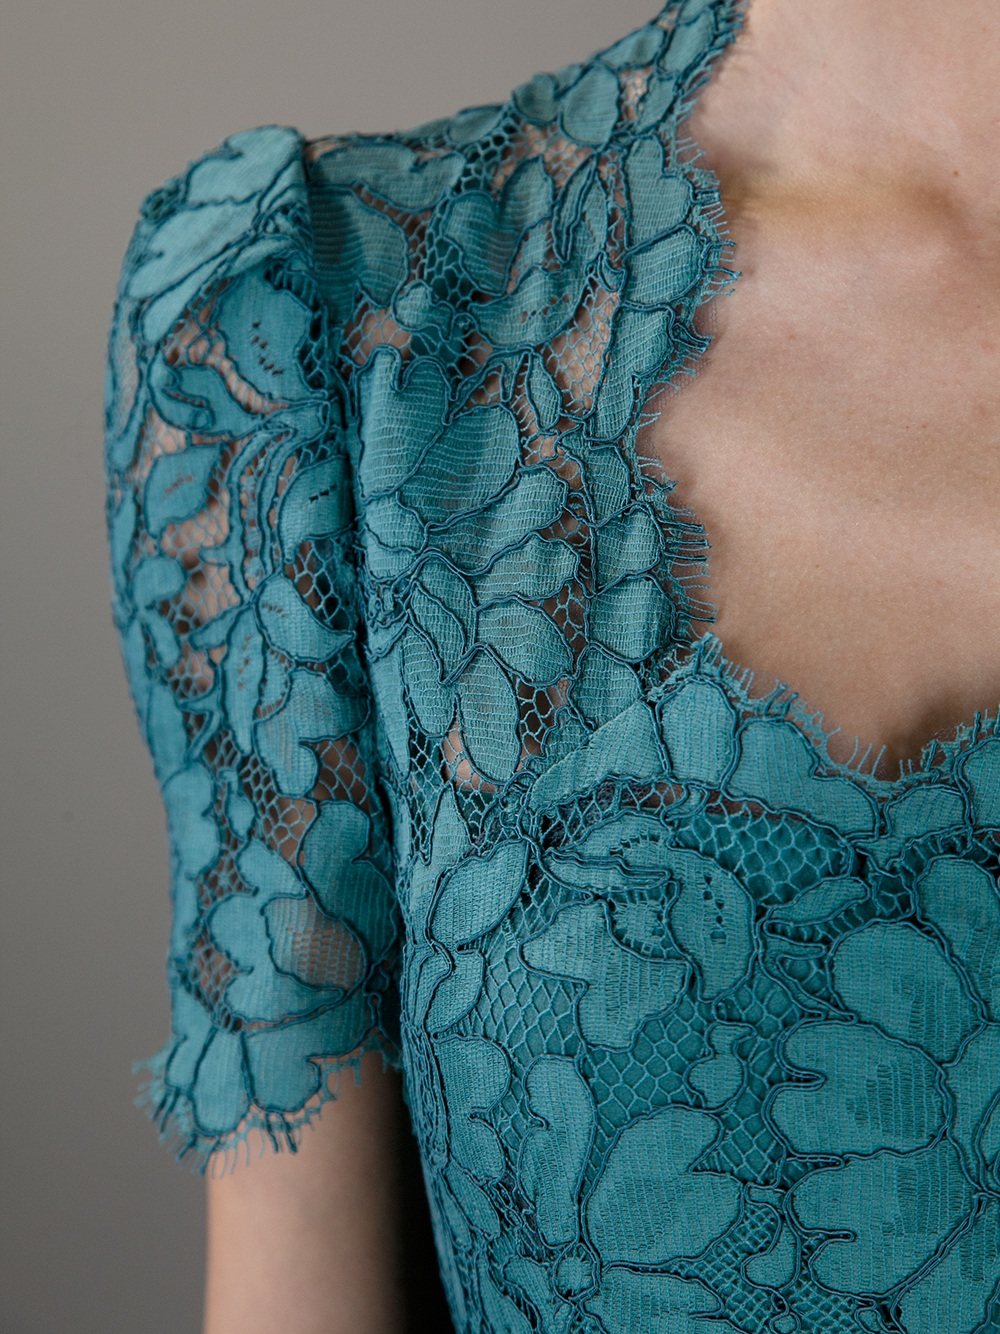 Dolce & Gabbana Lace Dress in Blue | Lyst